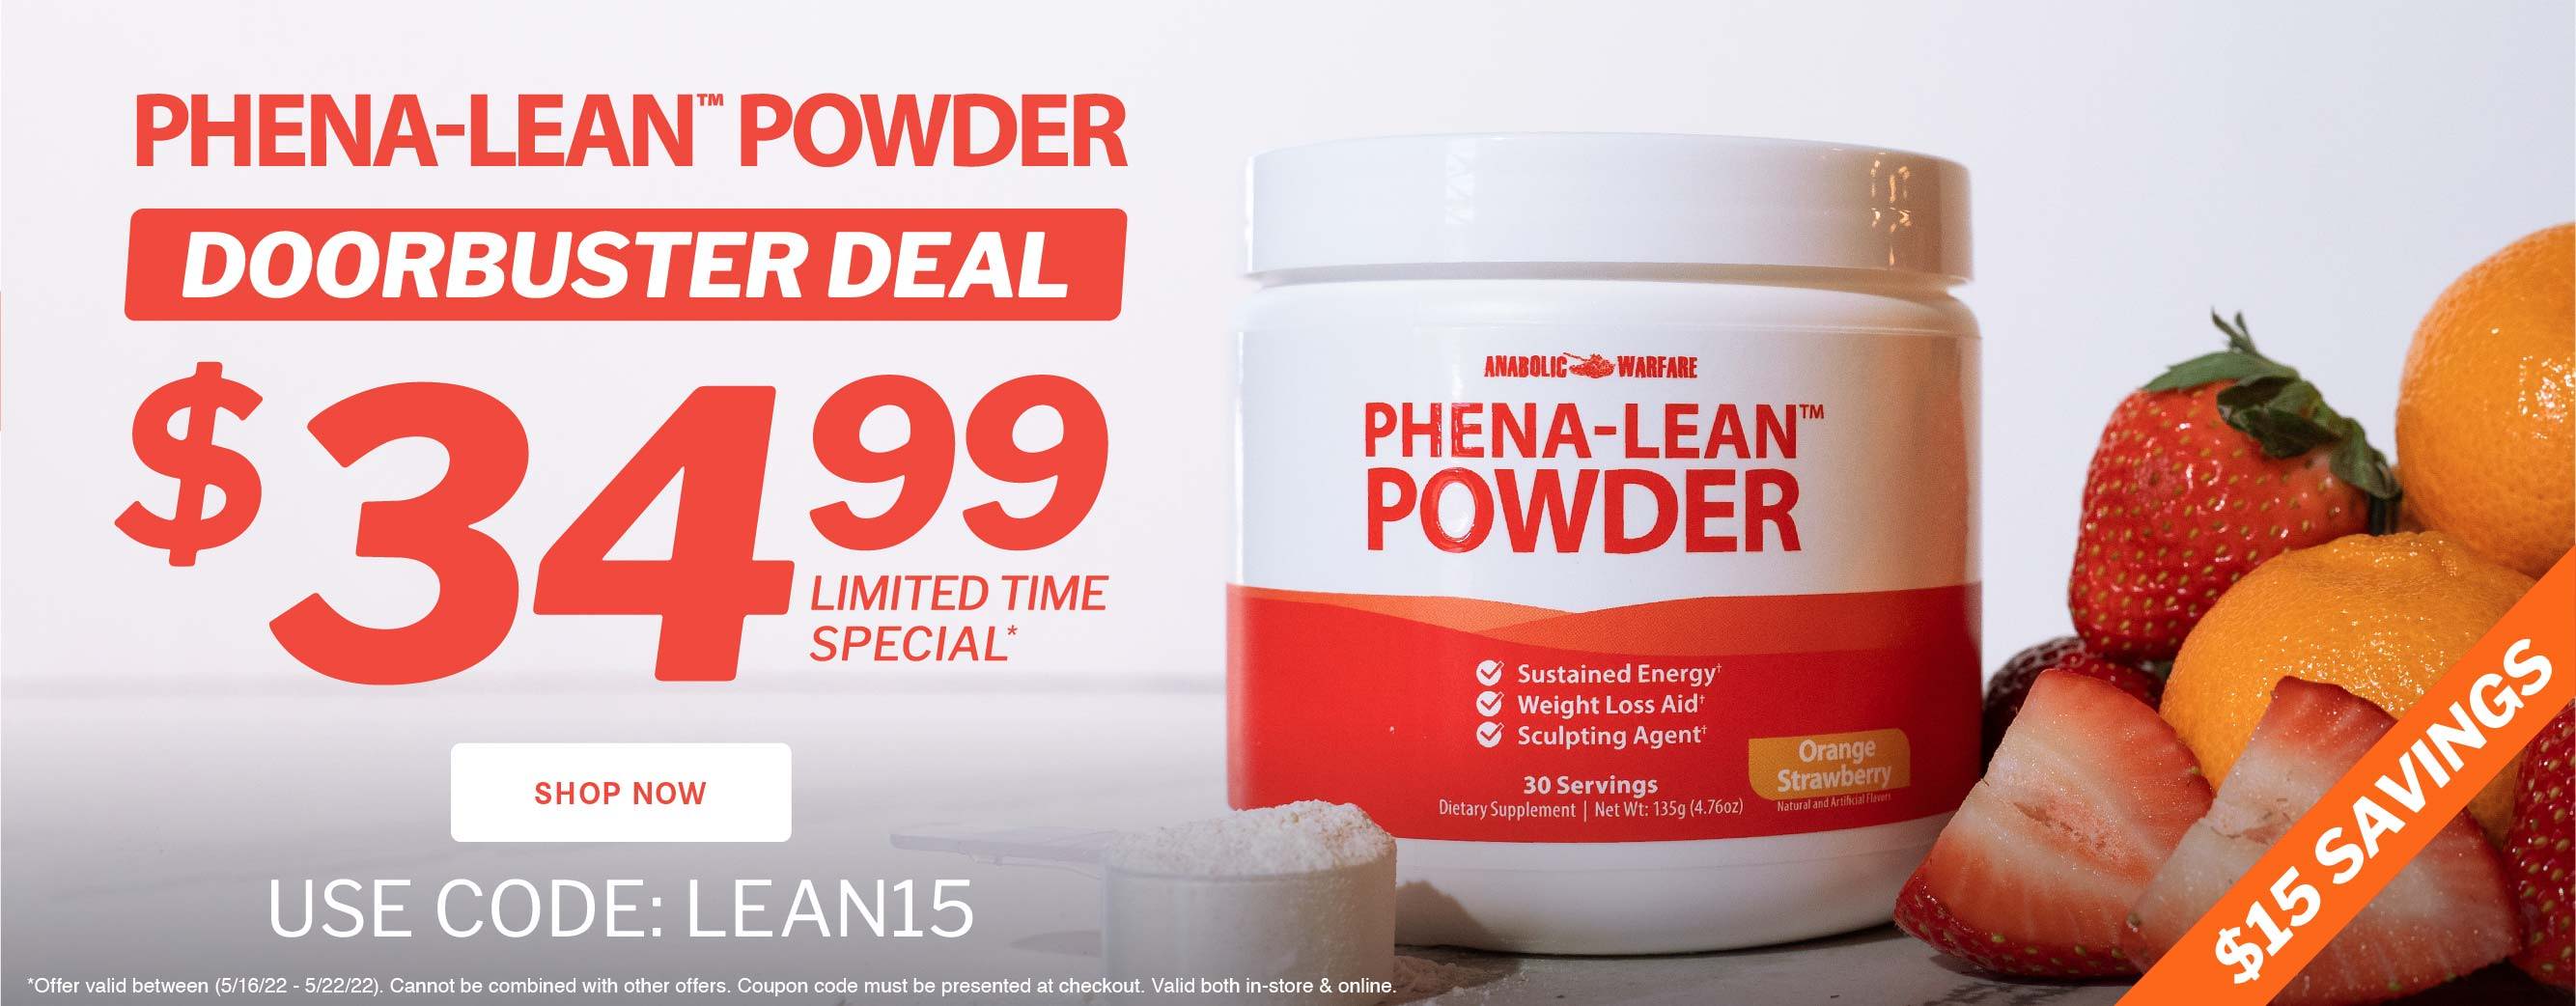 Phena-Lean Powder $34.99 This Week Only